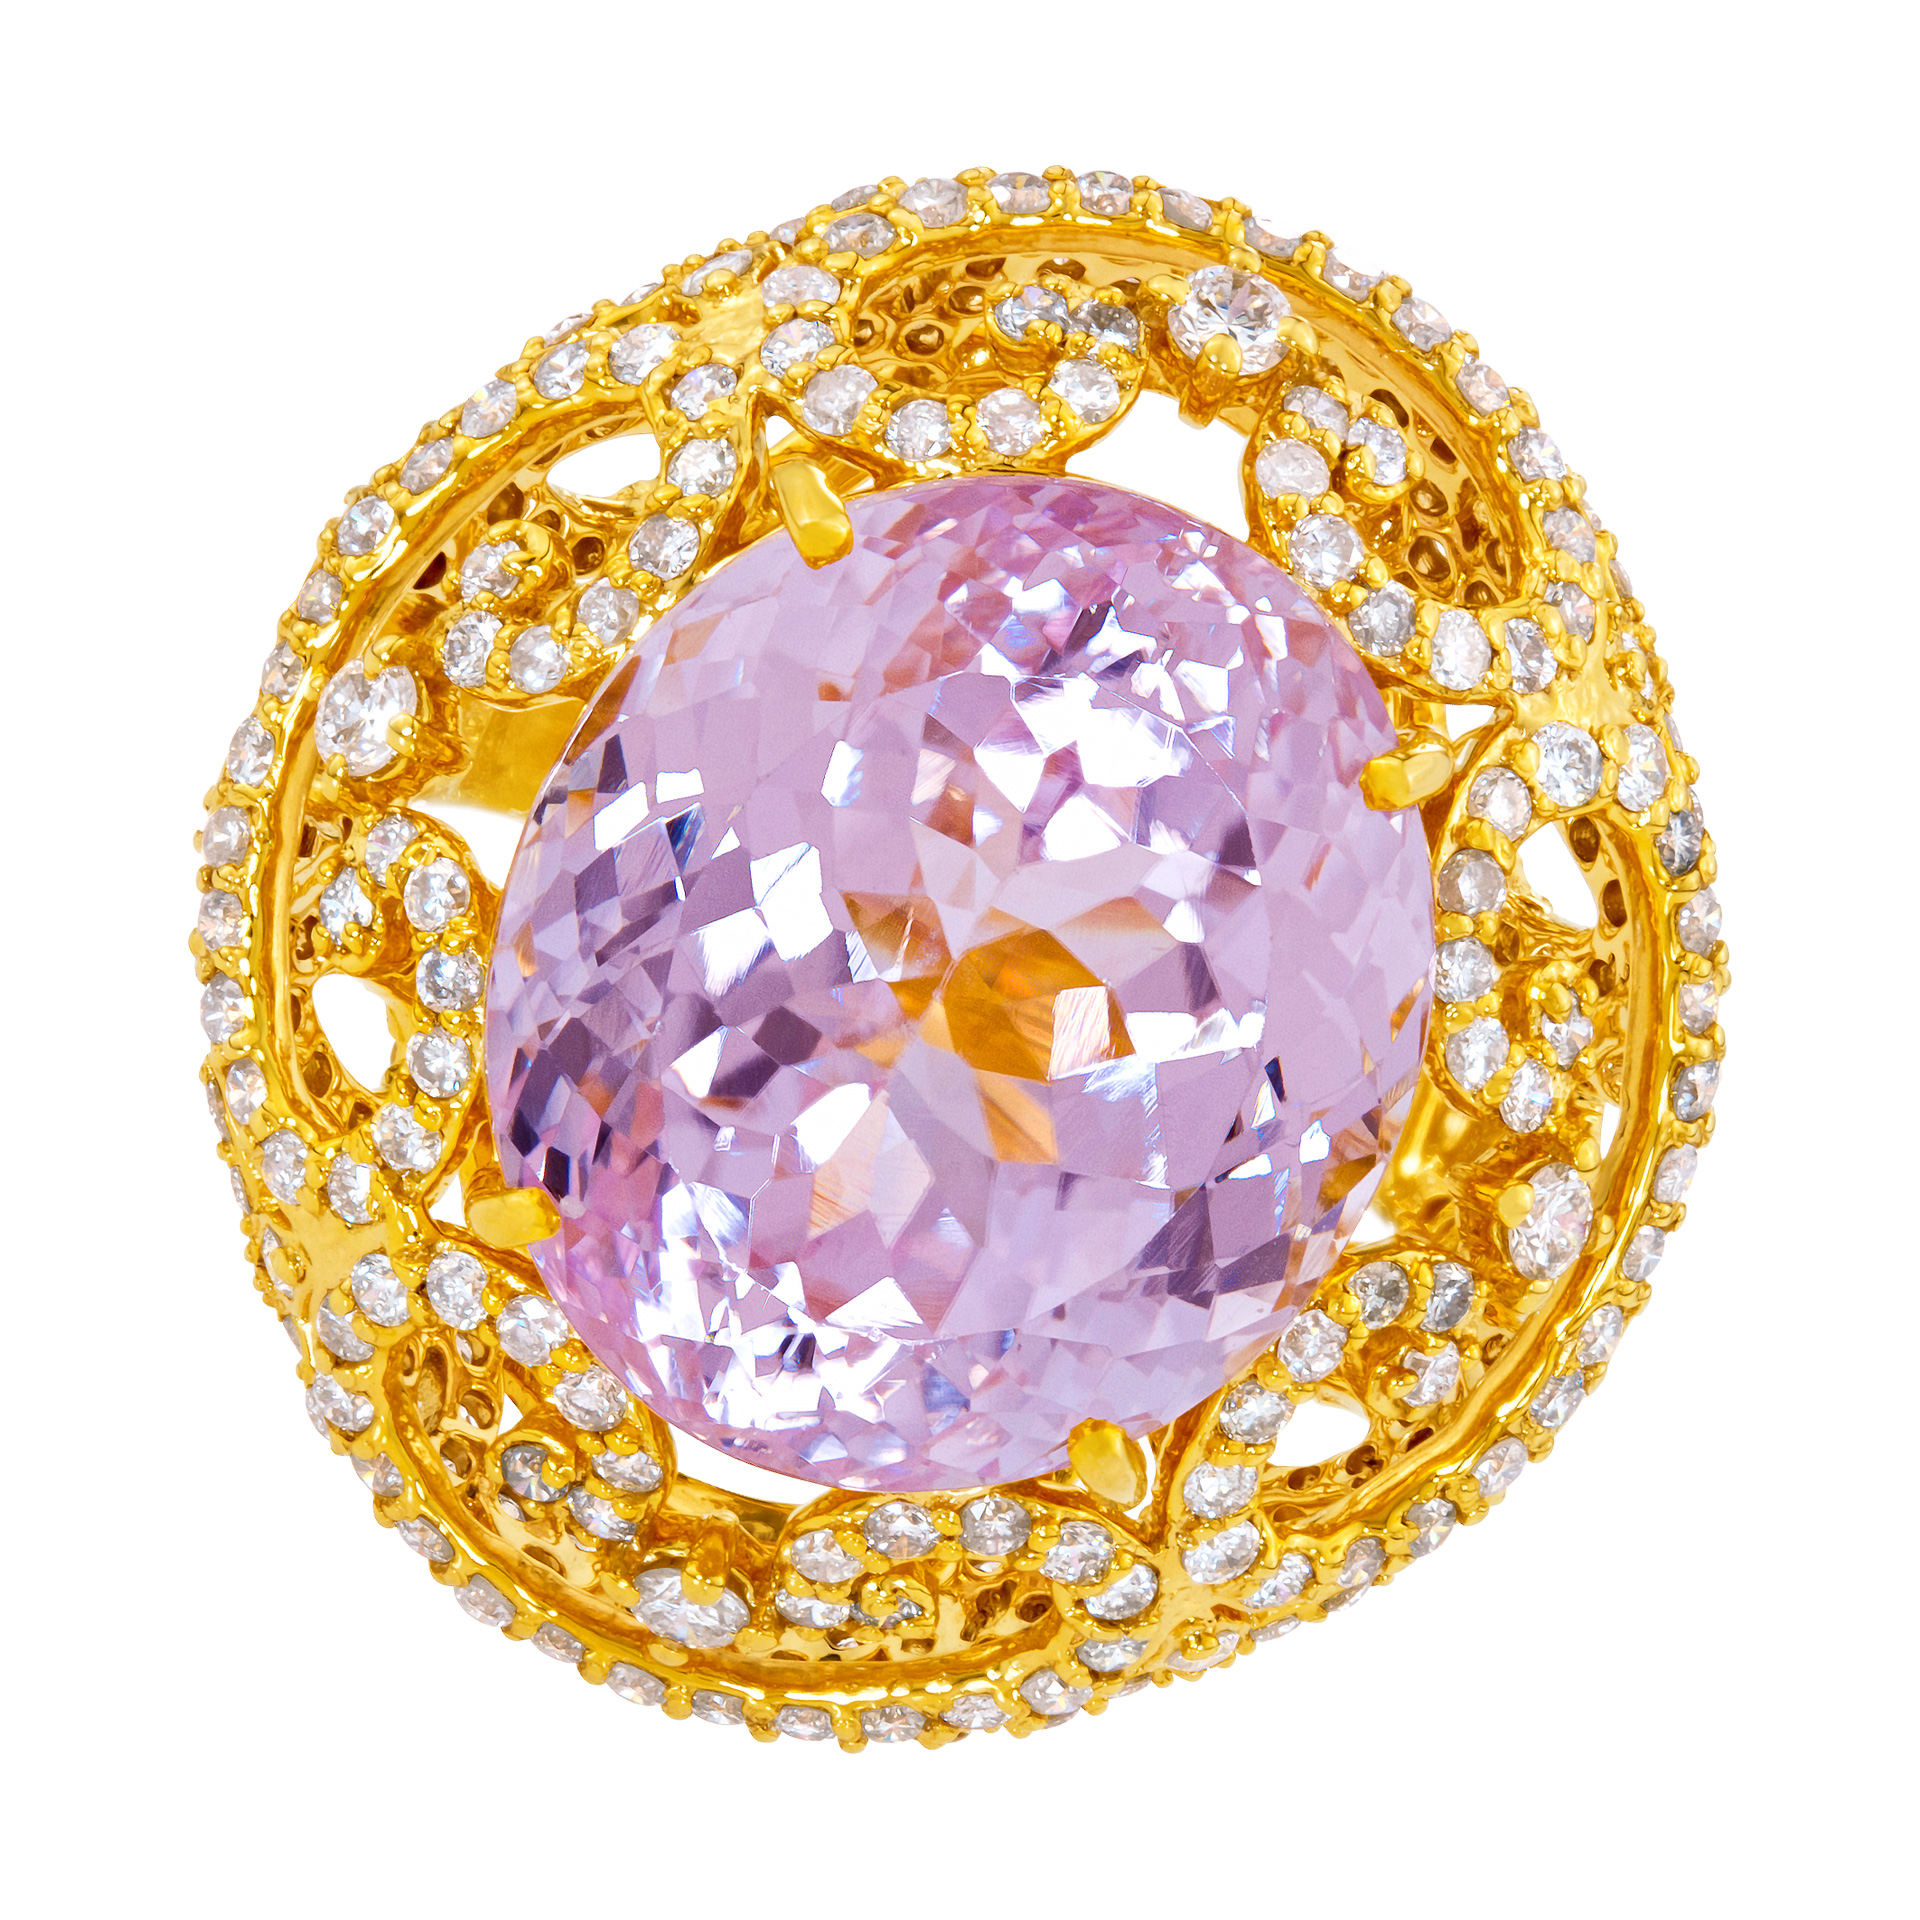 Kunizite and diamond ring set in 18k gold image 1